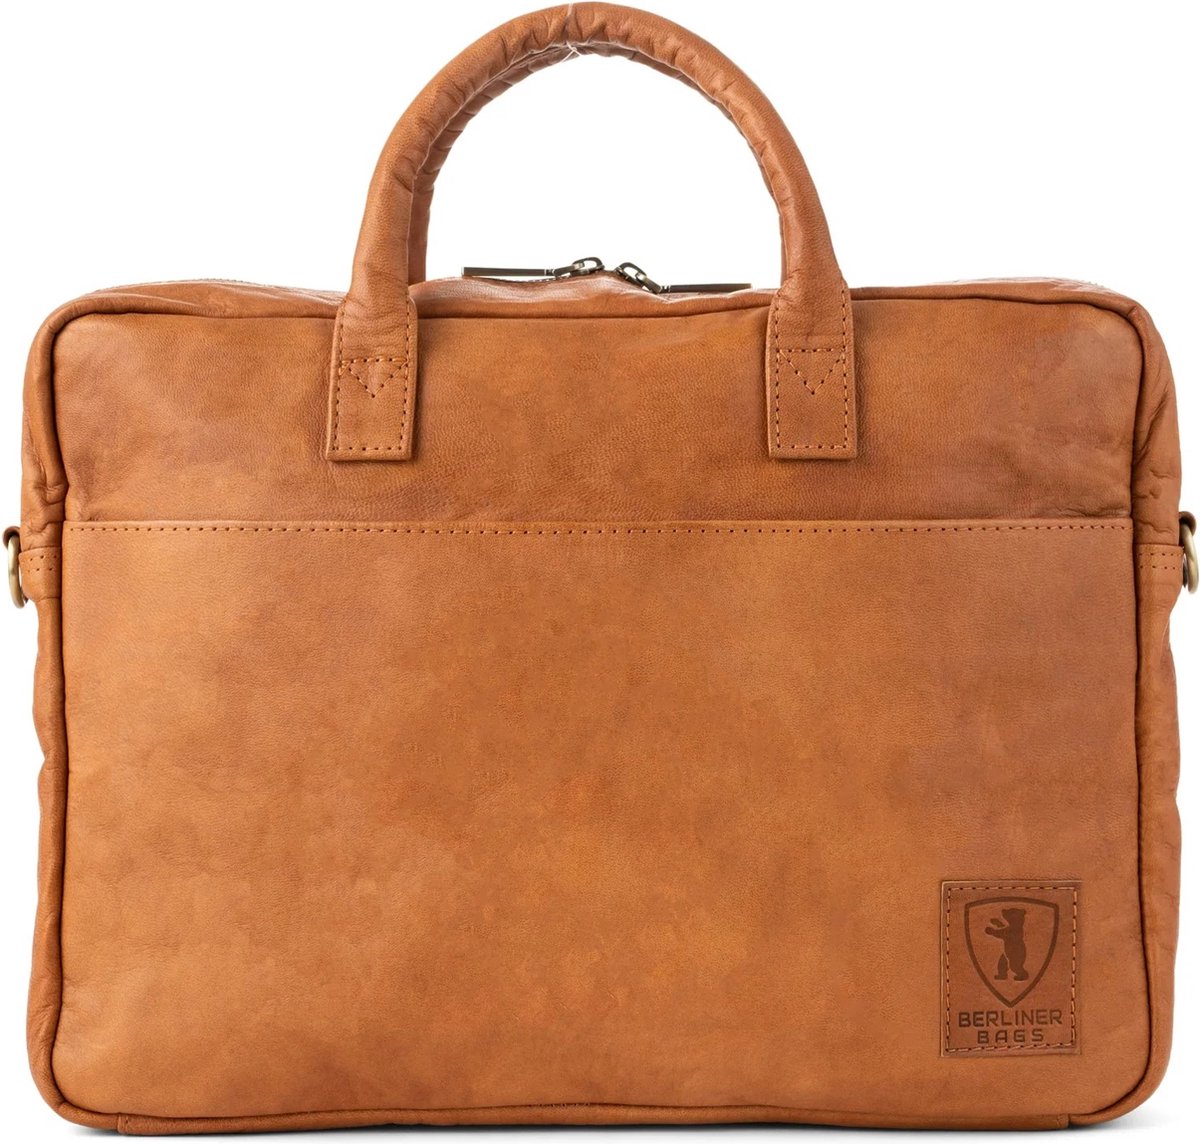 Berliner Bags - Madrid 2.0 - Laptoptas - Leder - handgemaakt - Vintage - Retro